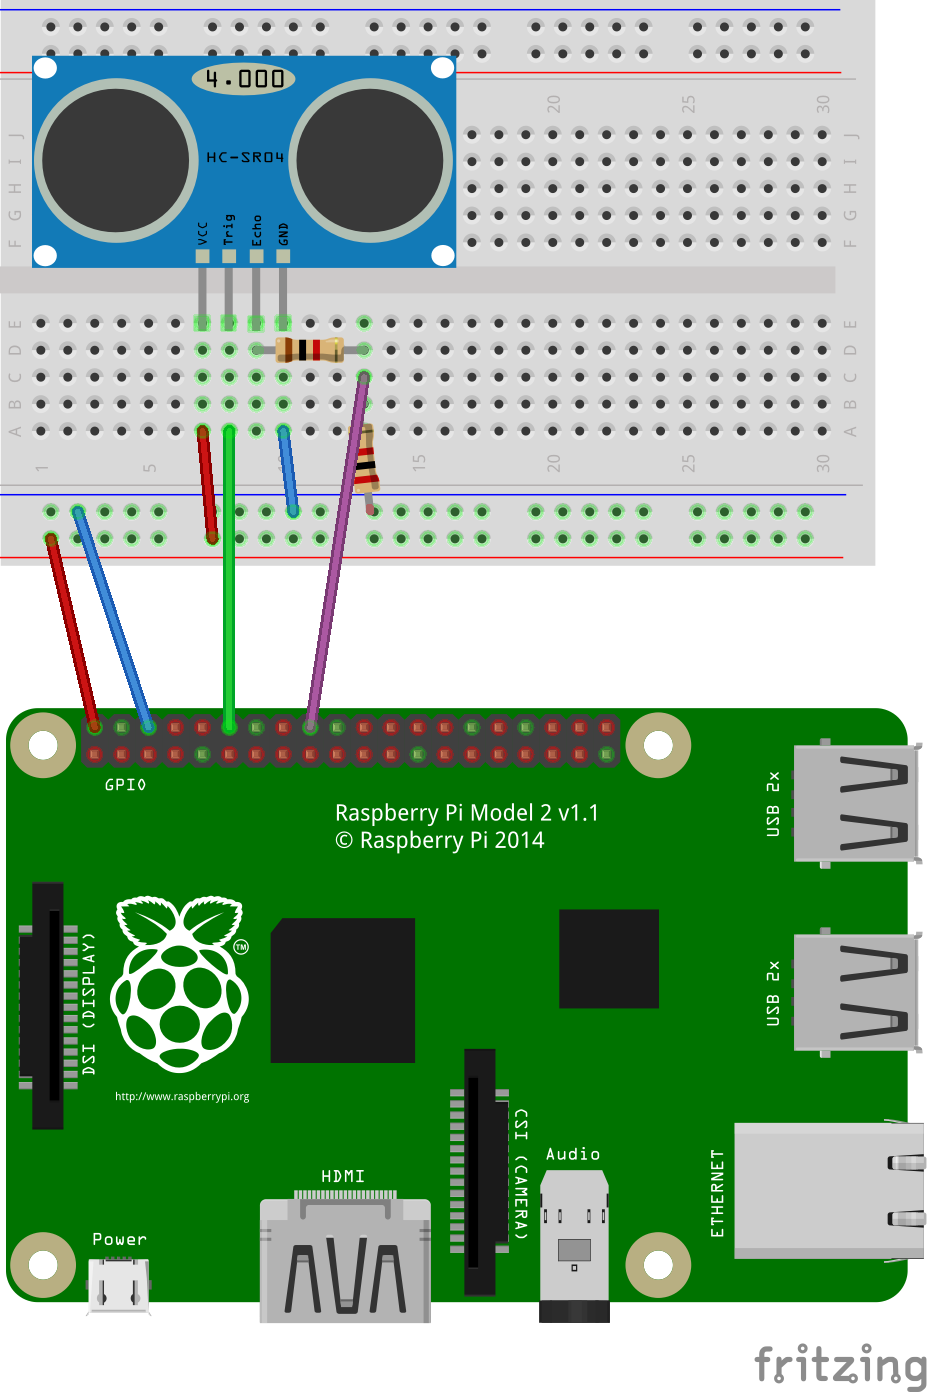 Wiring HC-SR04 distance detection module to Raspberry Pi